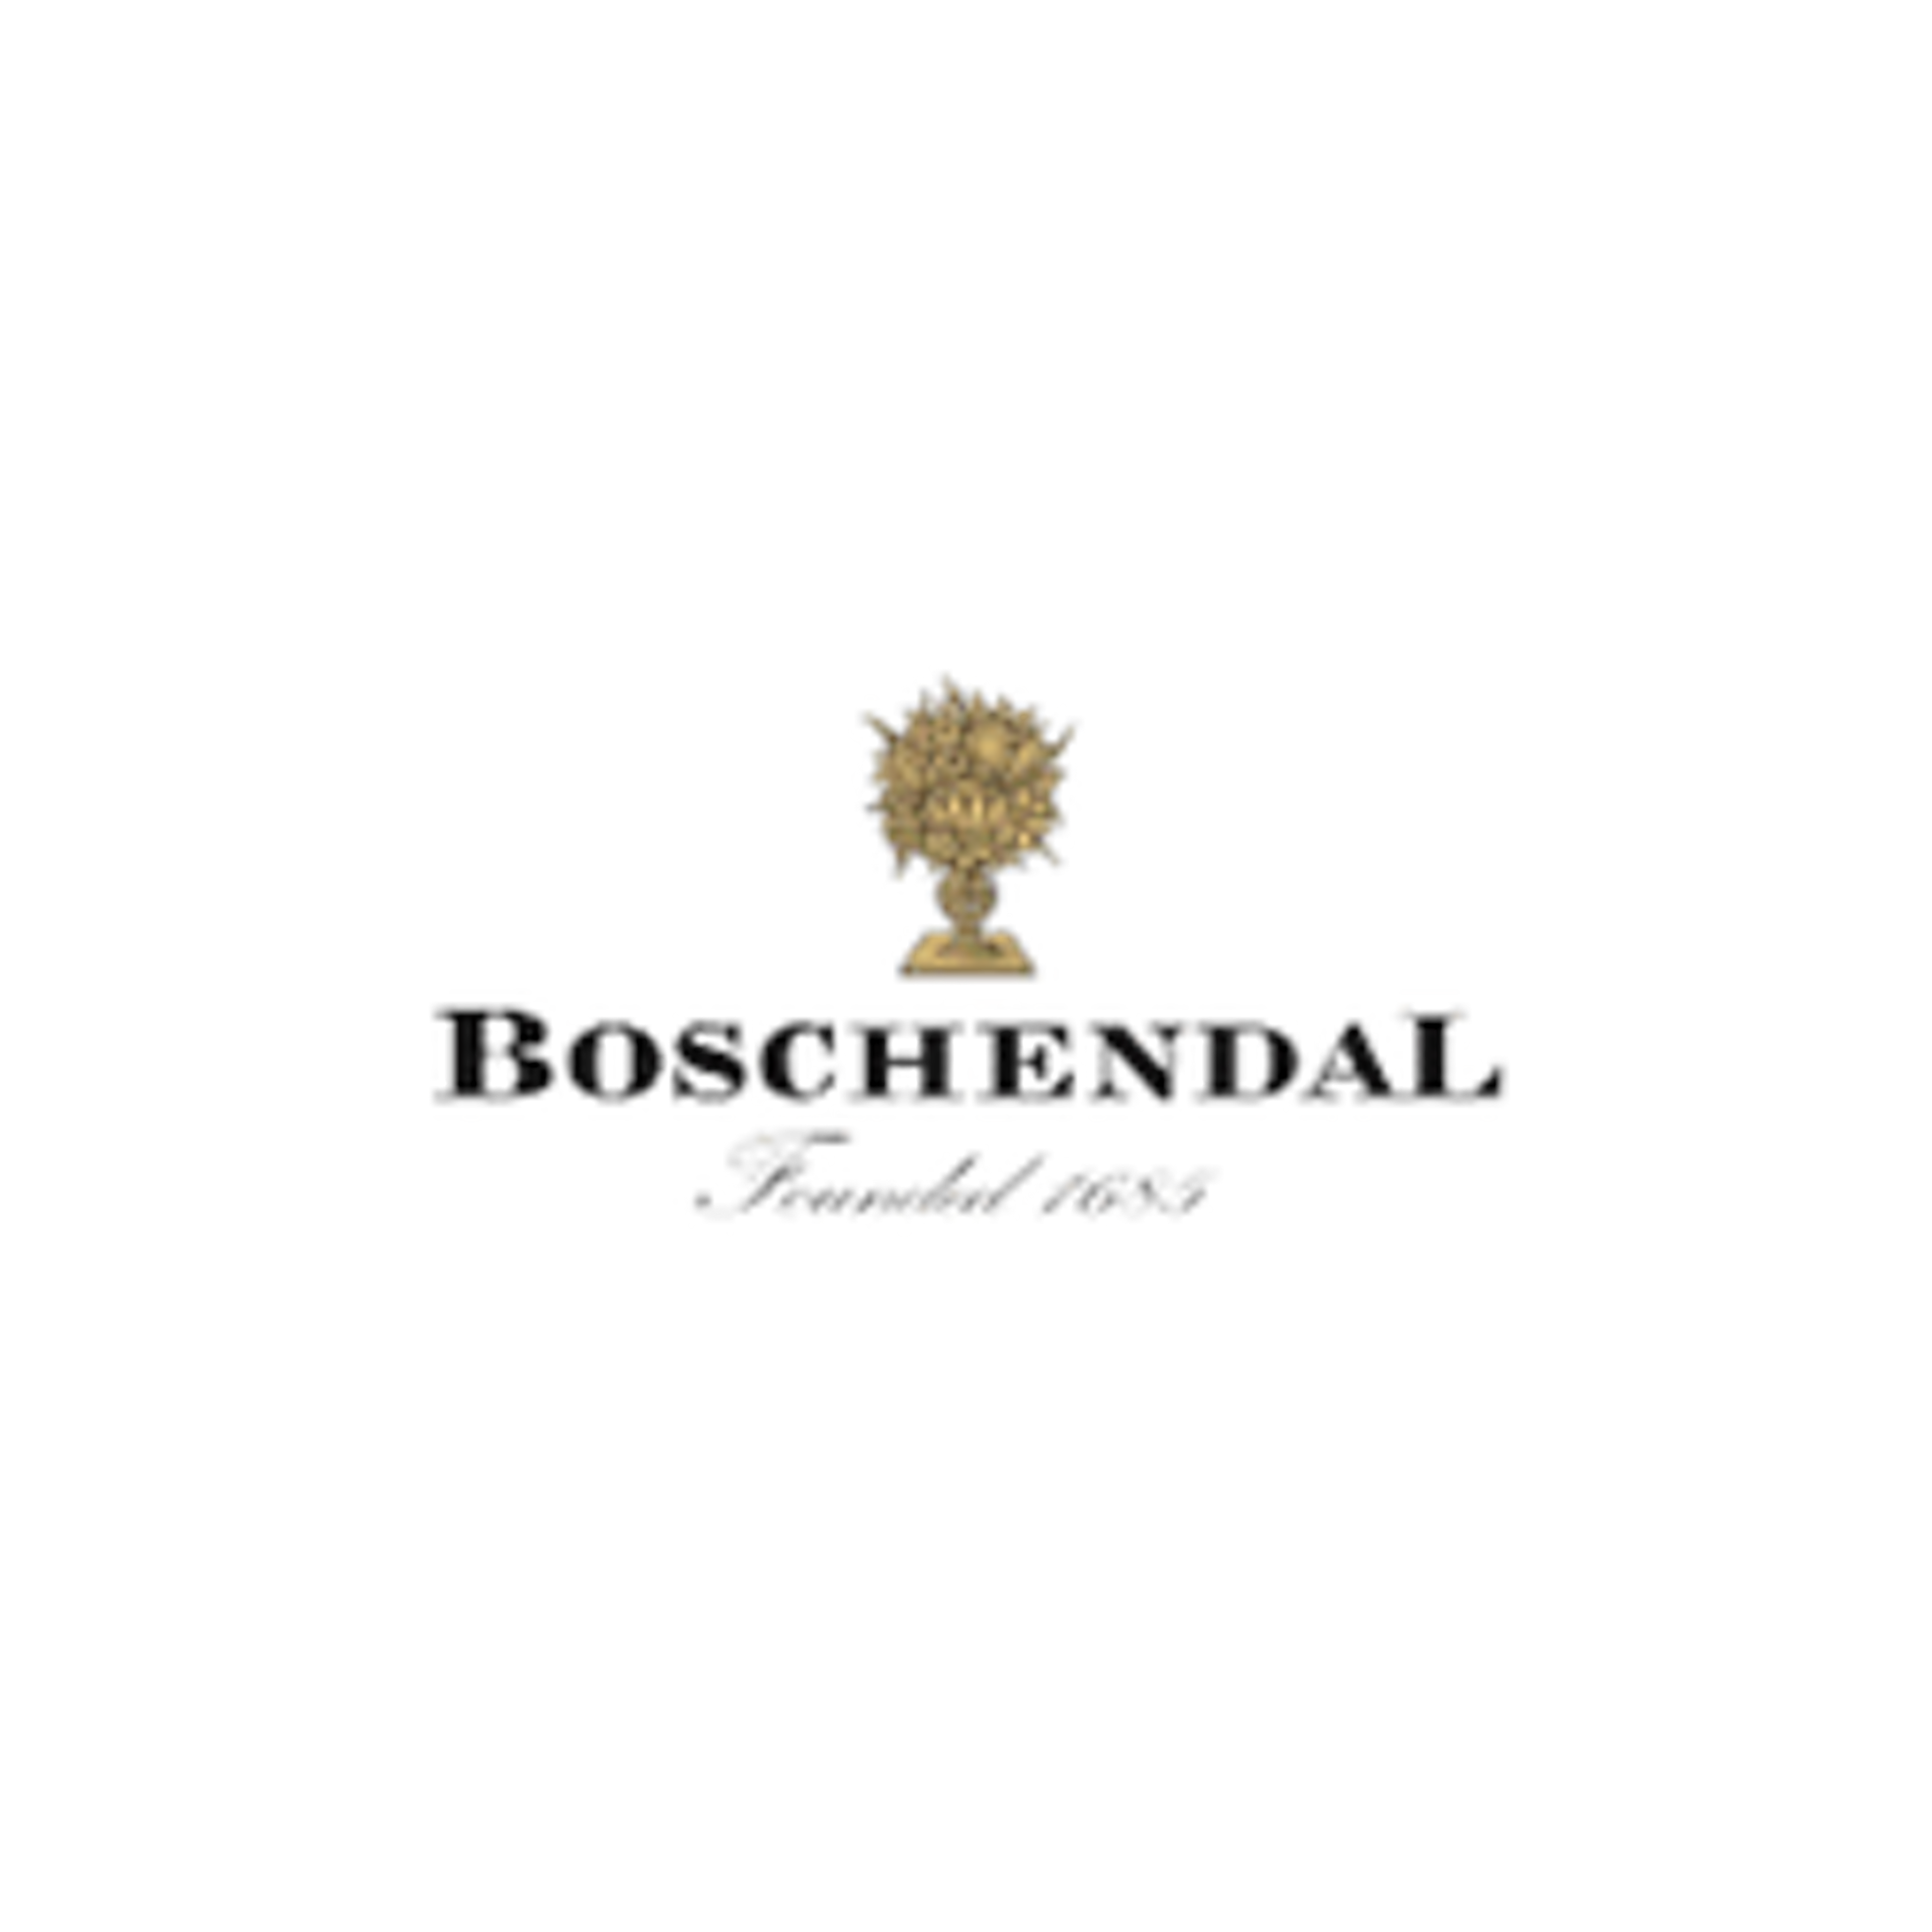 Boschendal Logo